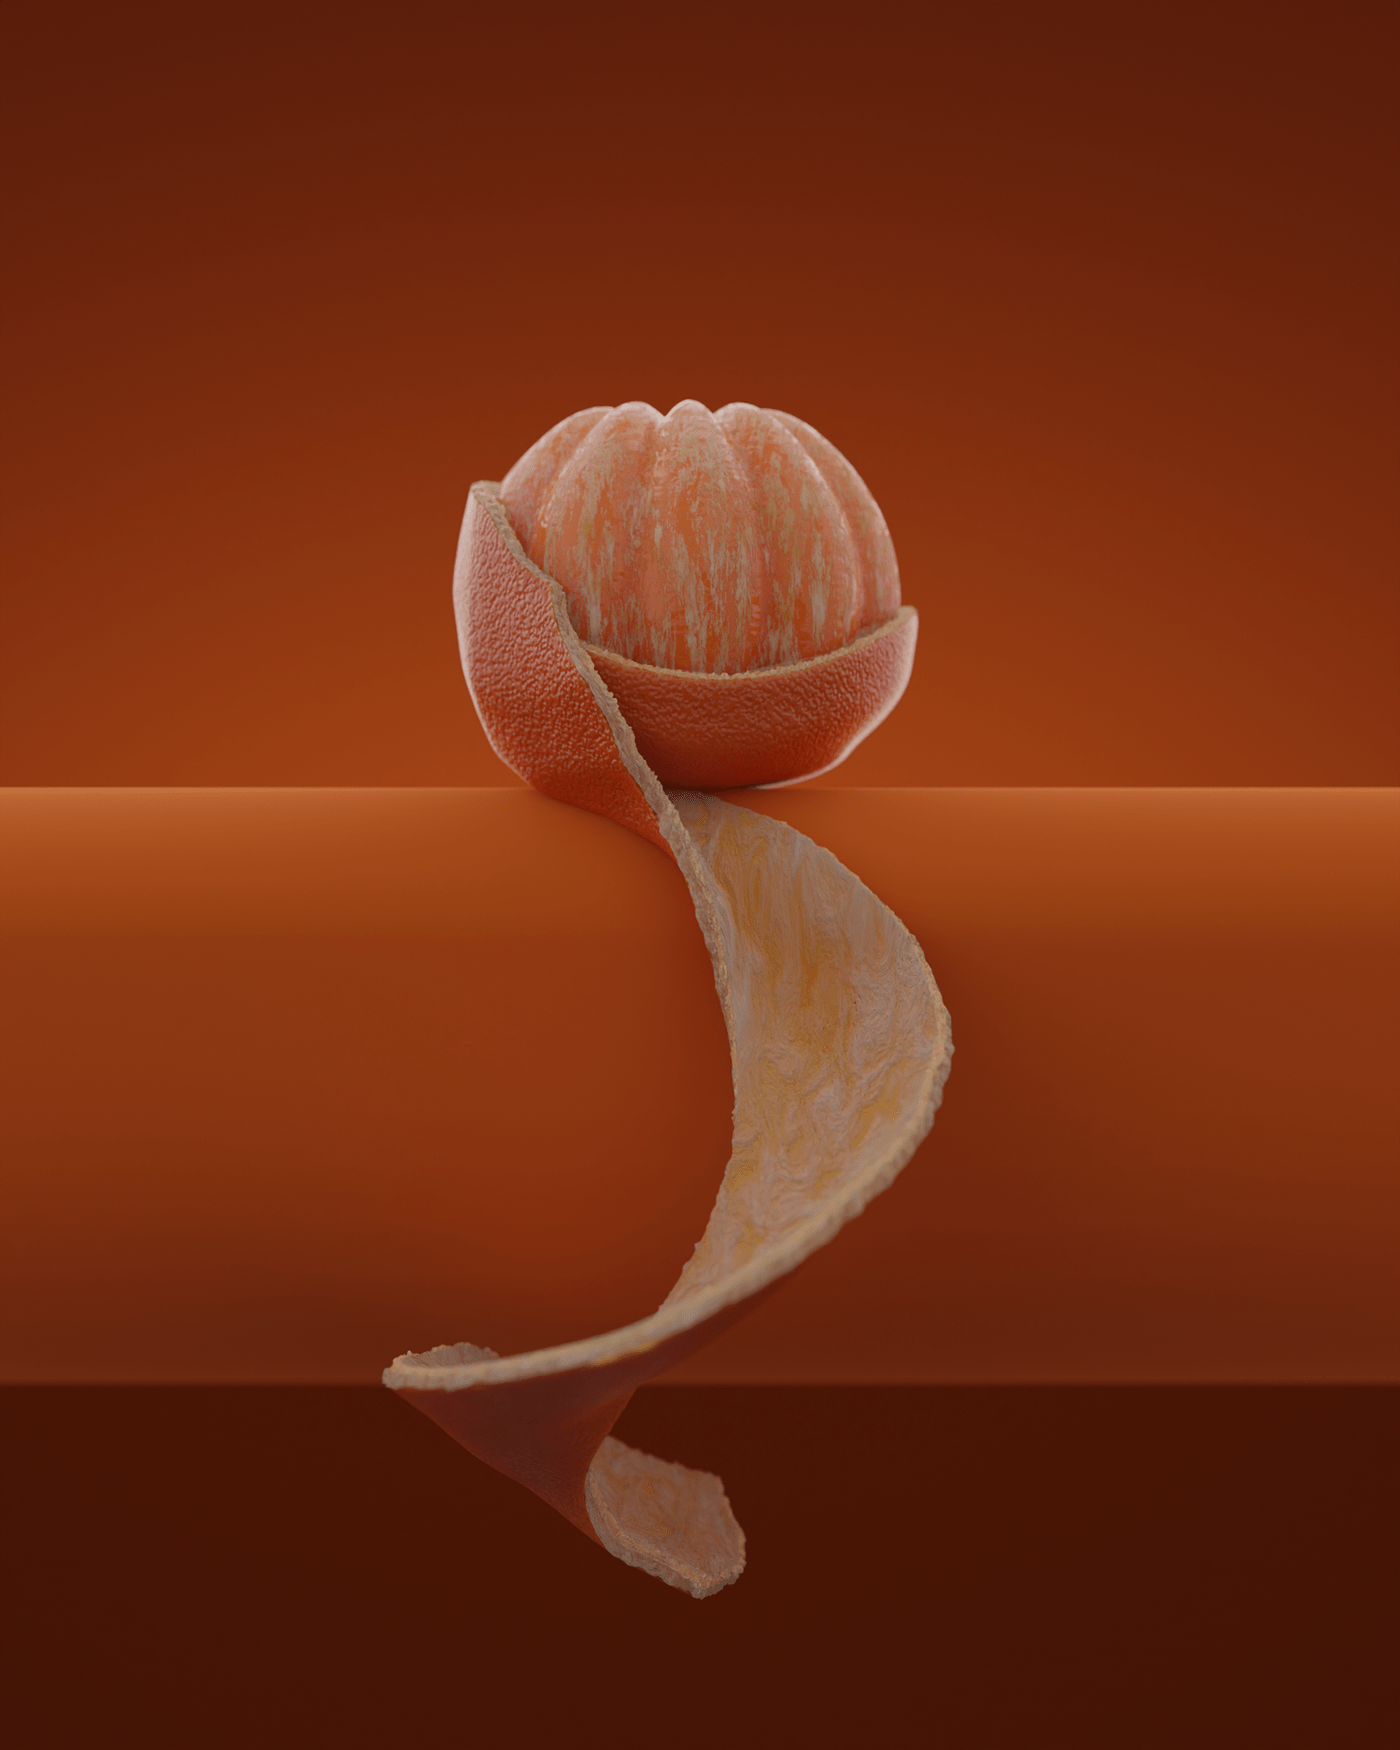 3D 3dFood 3dfruits 3drender blender CGI mandarine Render tangerine